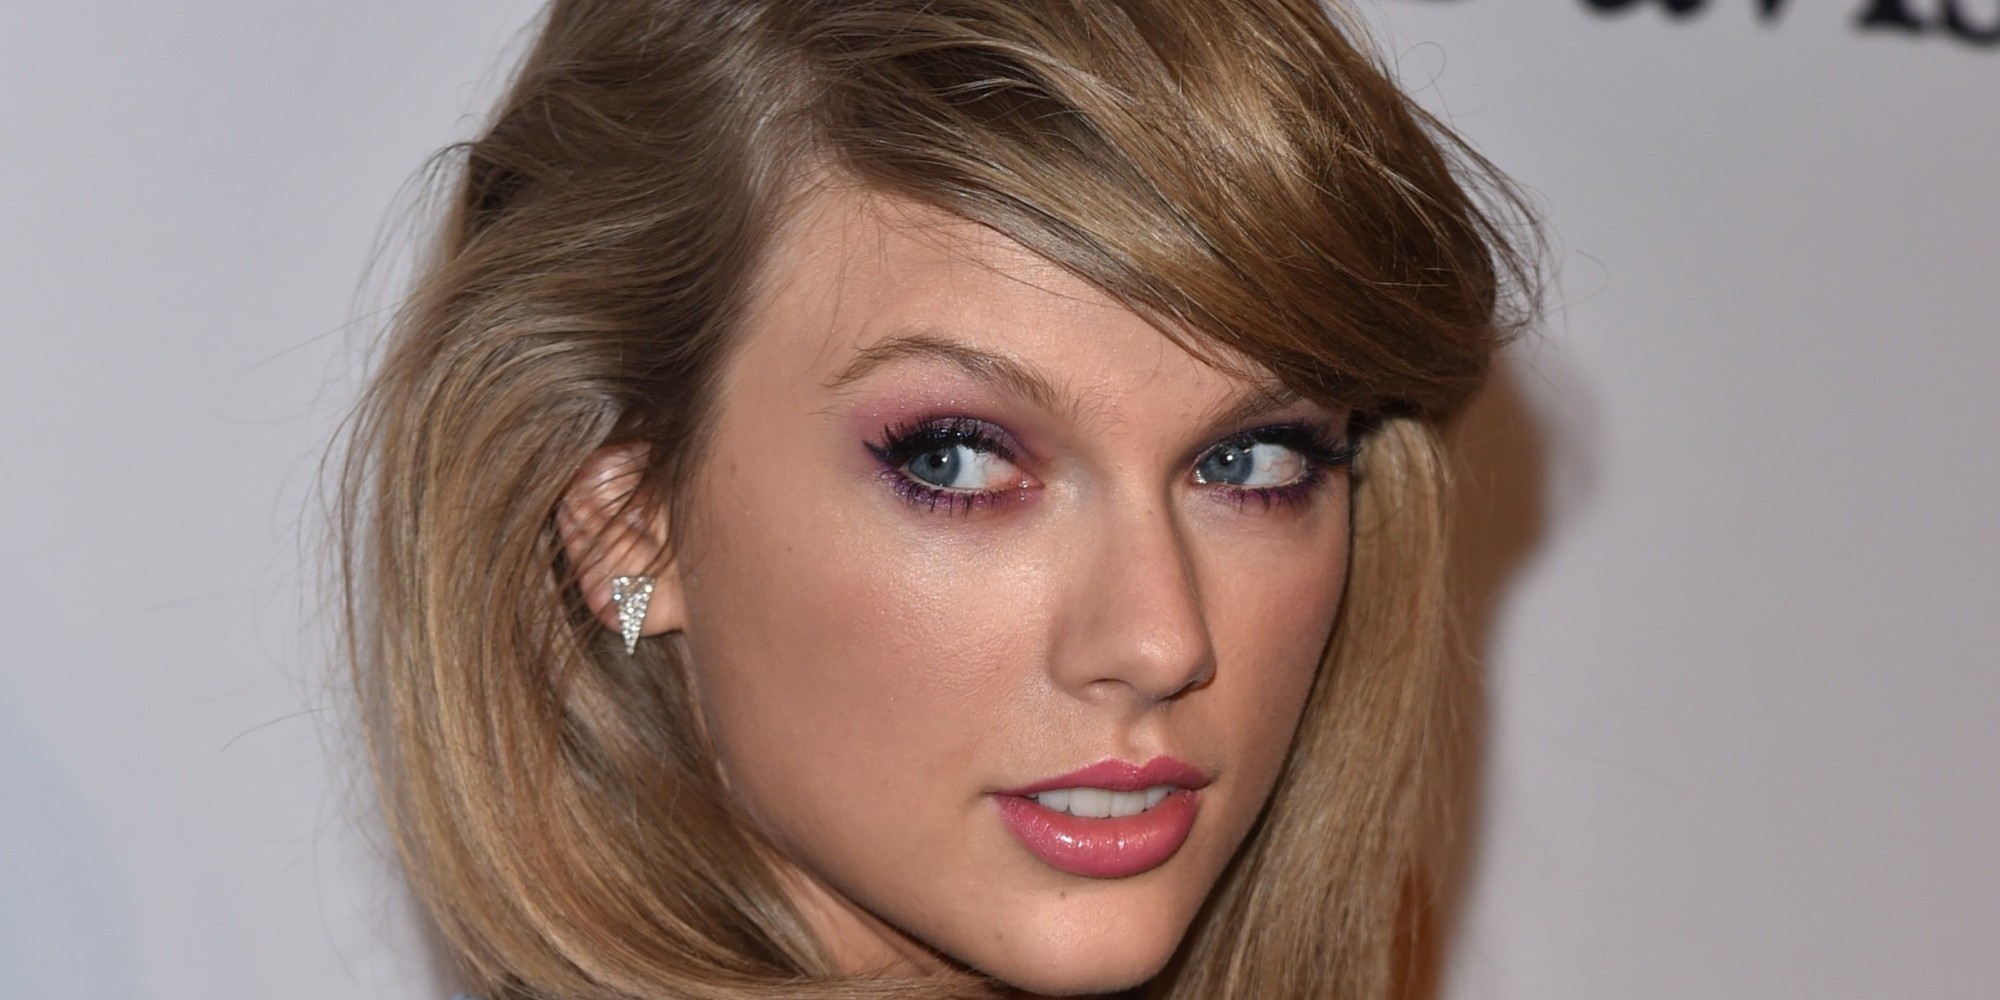 Taylor Swift Backgrounds, Compatible - PC, Mobile, Gadgets| 2000x1000 px